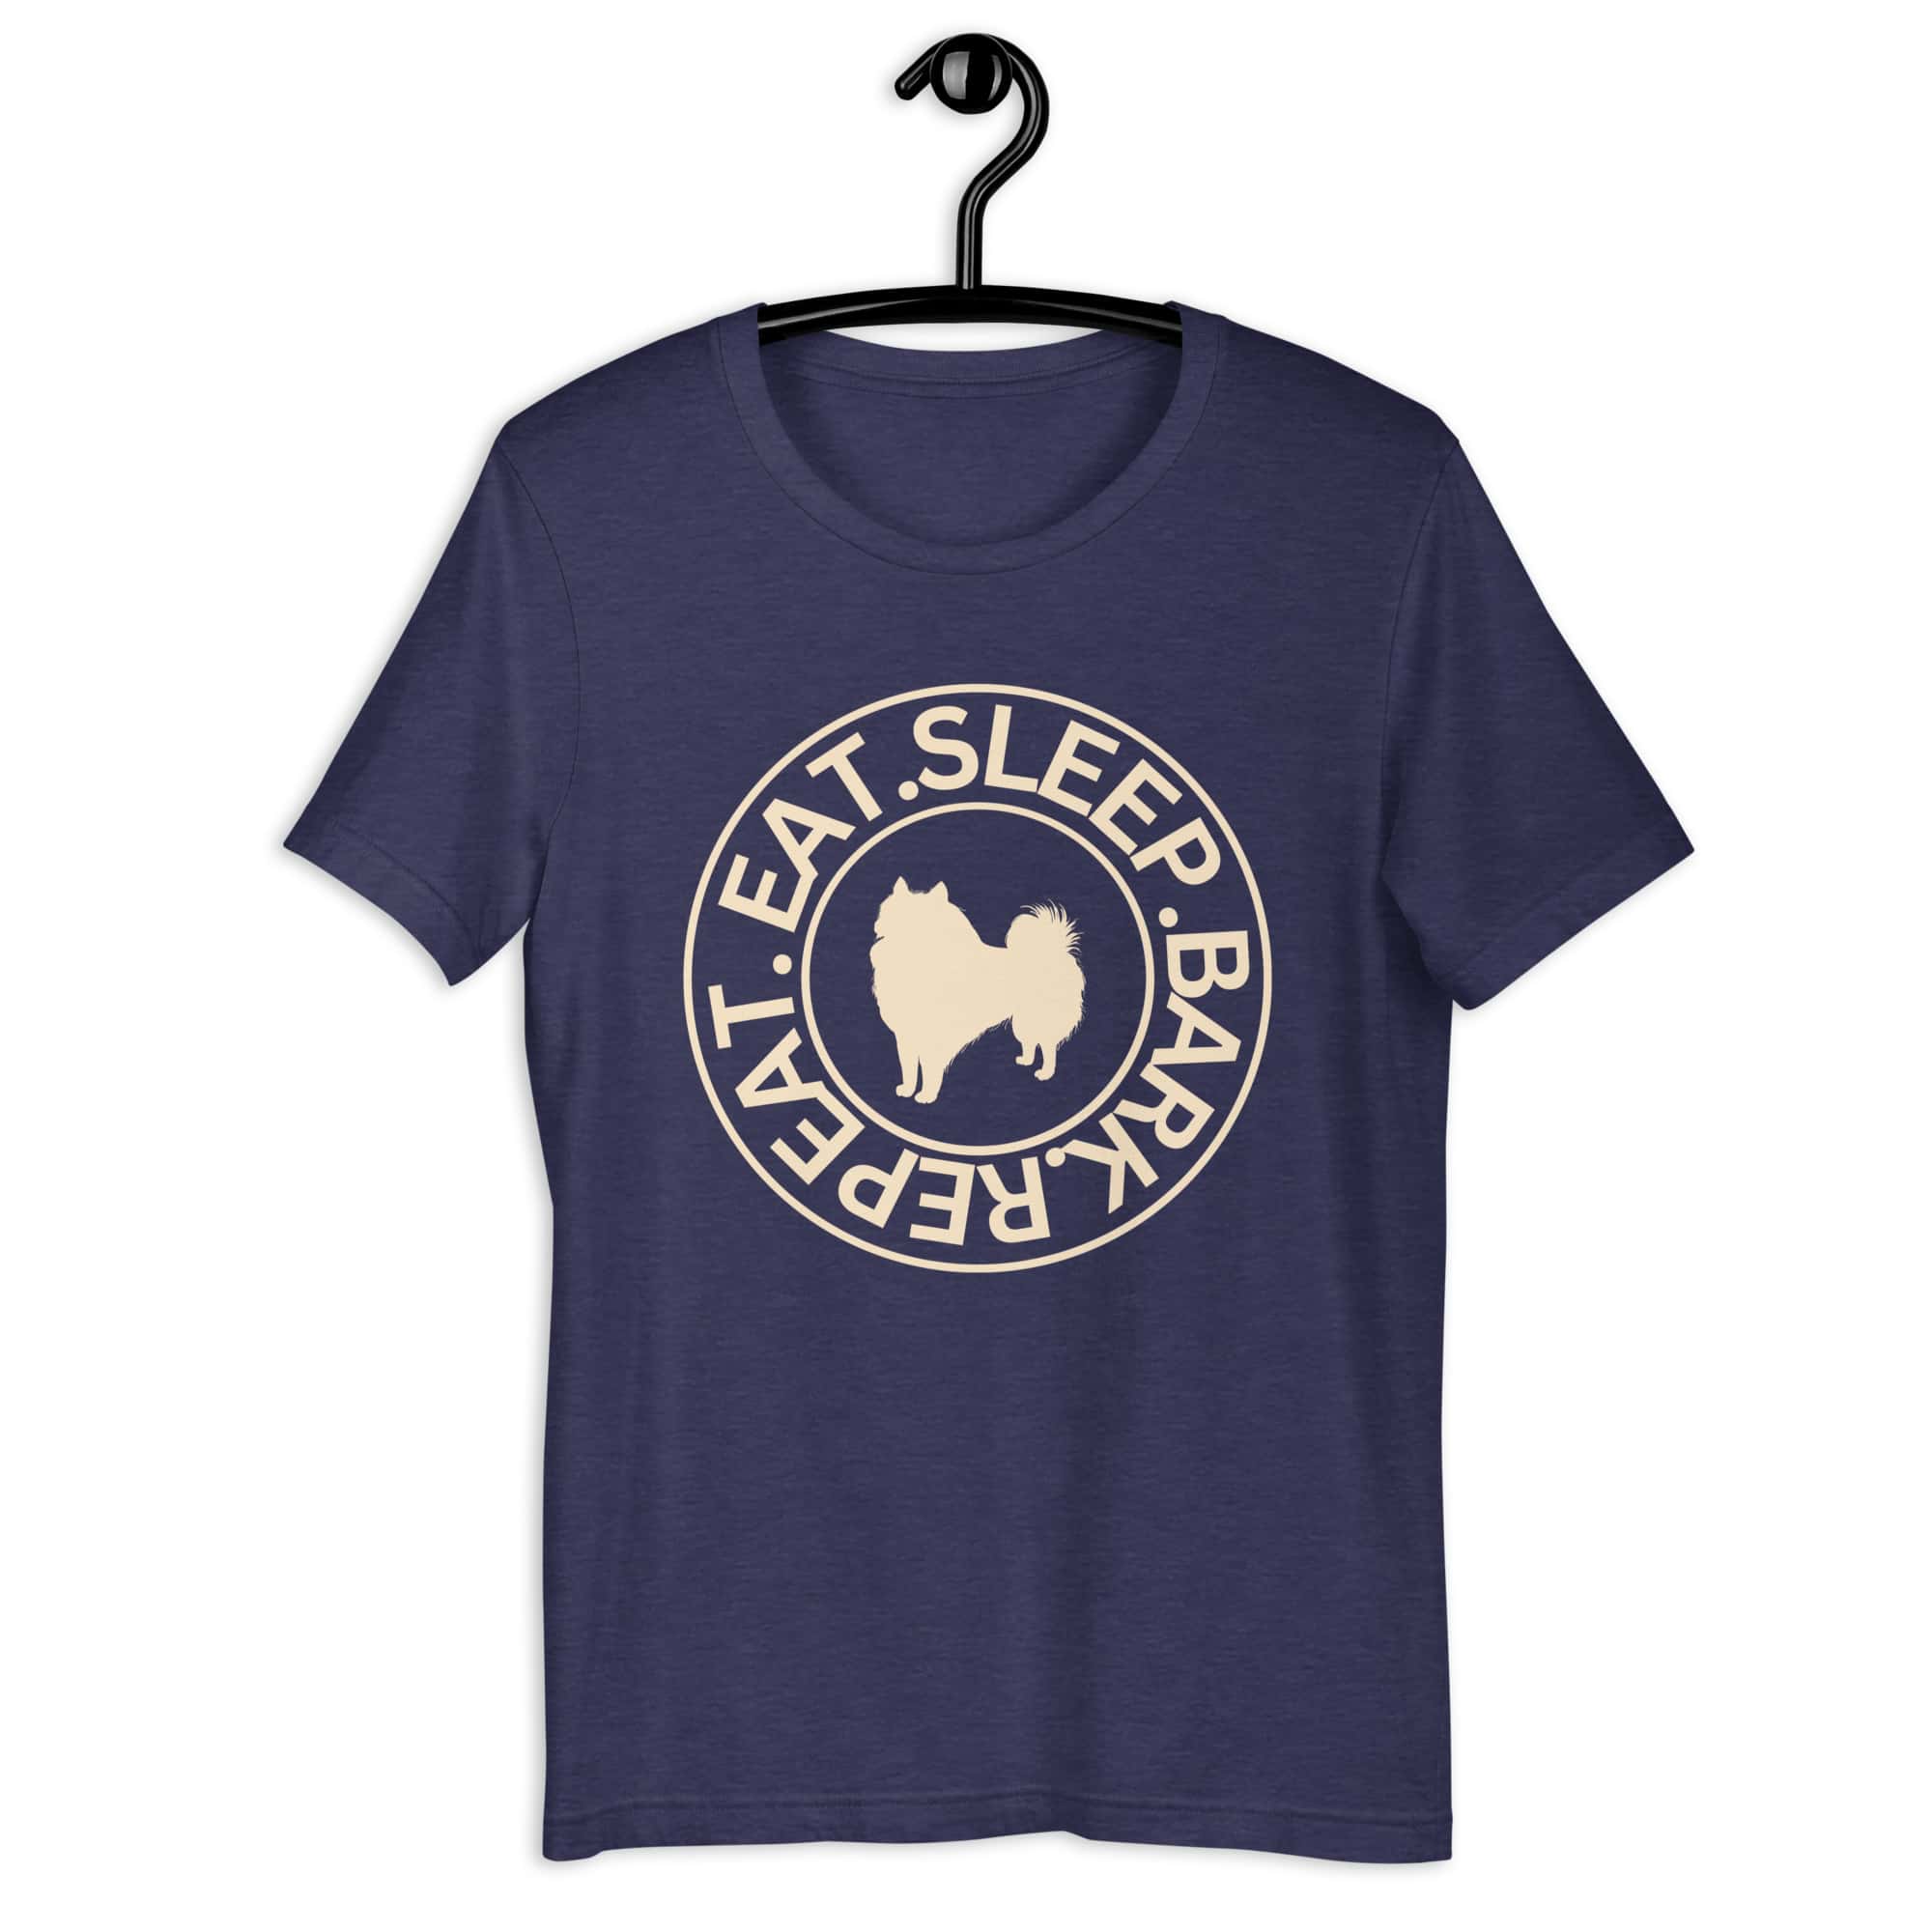 Eat Sleep Bark Repeat Poodle Unisex T-Shirt. Midnight Heather Navy